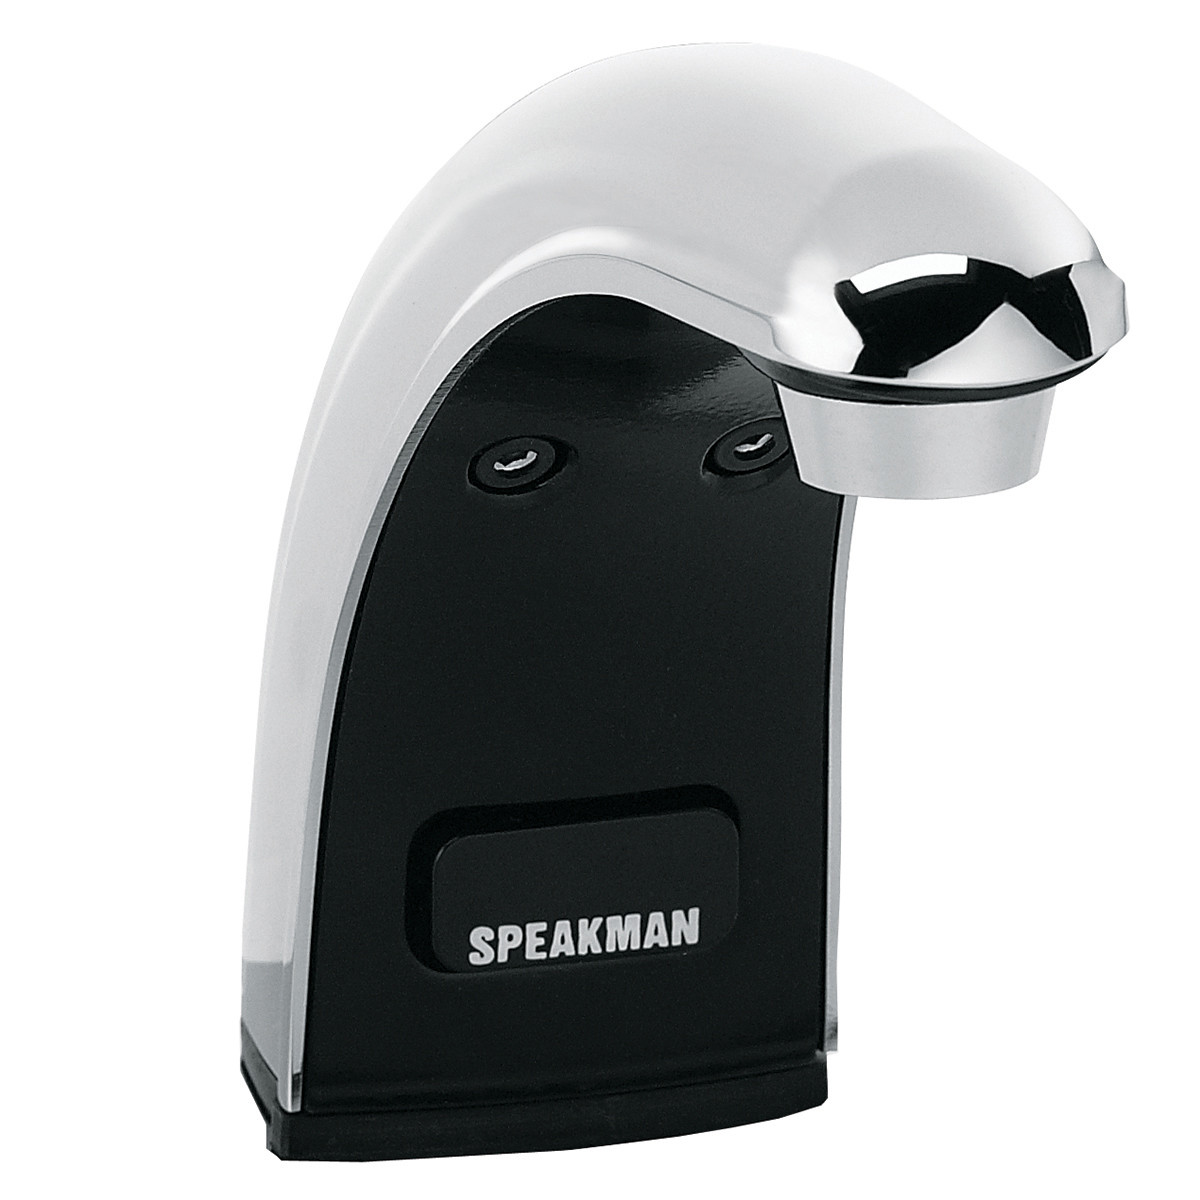 Speakman S8700CaE Sensorflo 0.5 GPM Single Hole Electronic Bathroom